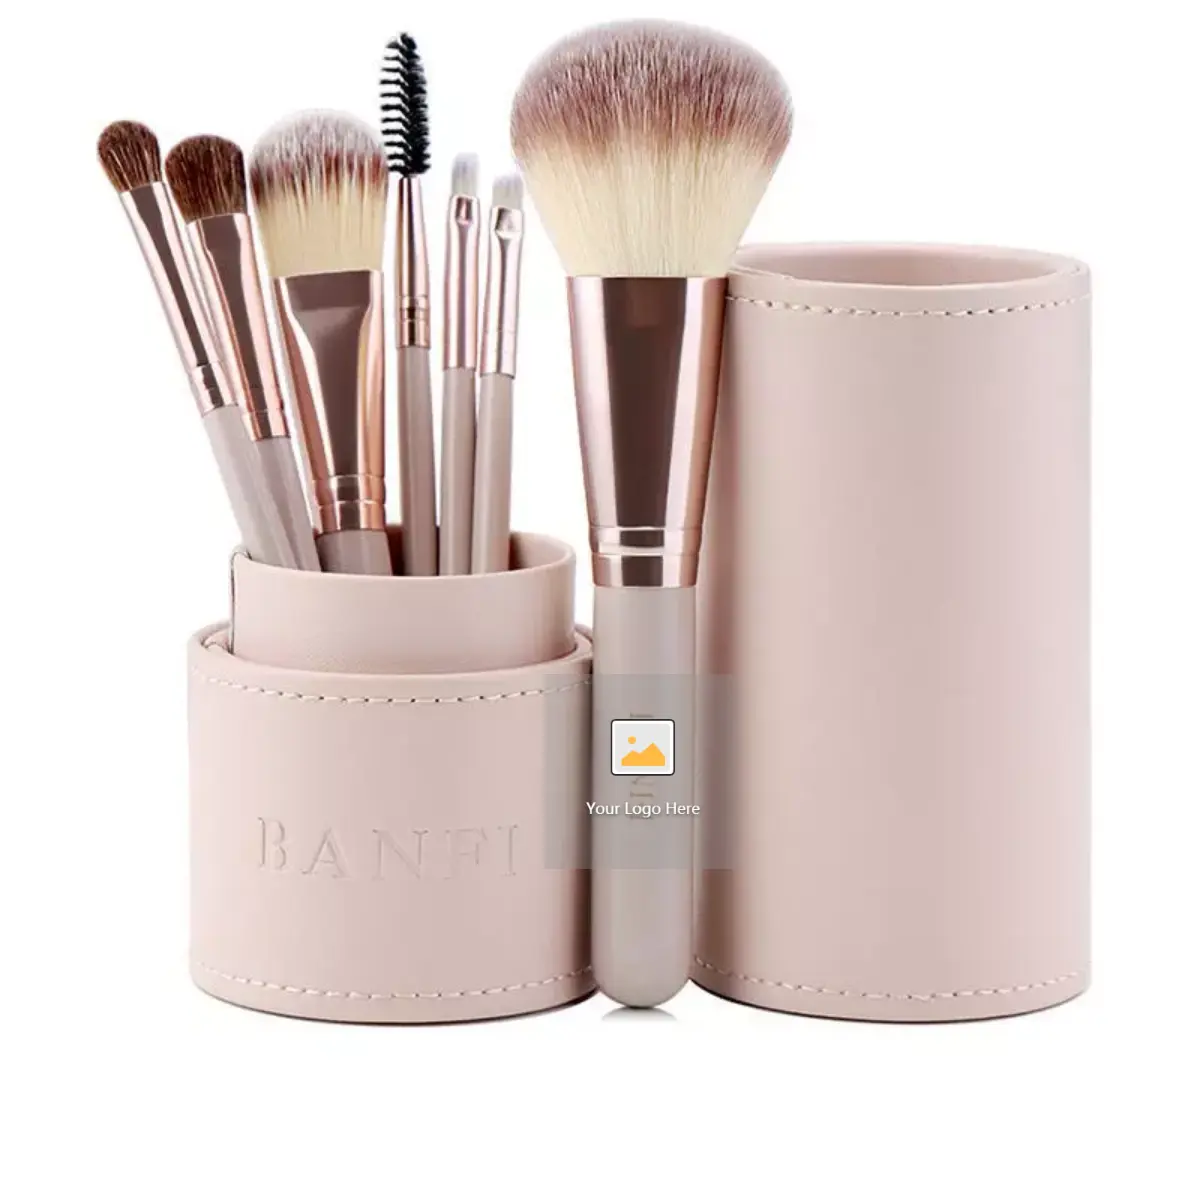 Makeup beauty tool popular make up brush sets with holder 7pcs wood handle eyebrow brush makeup brushes